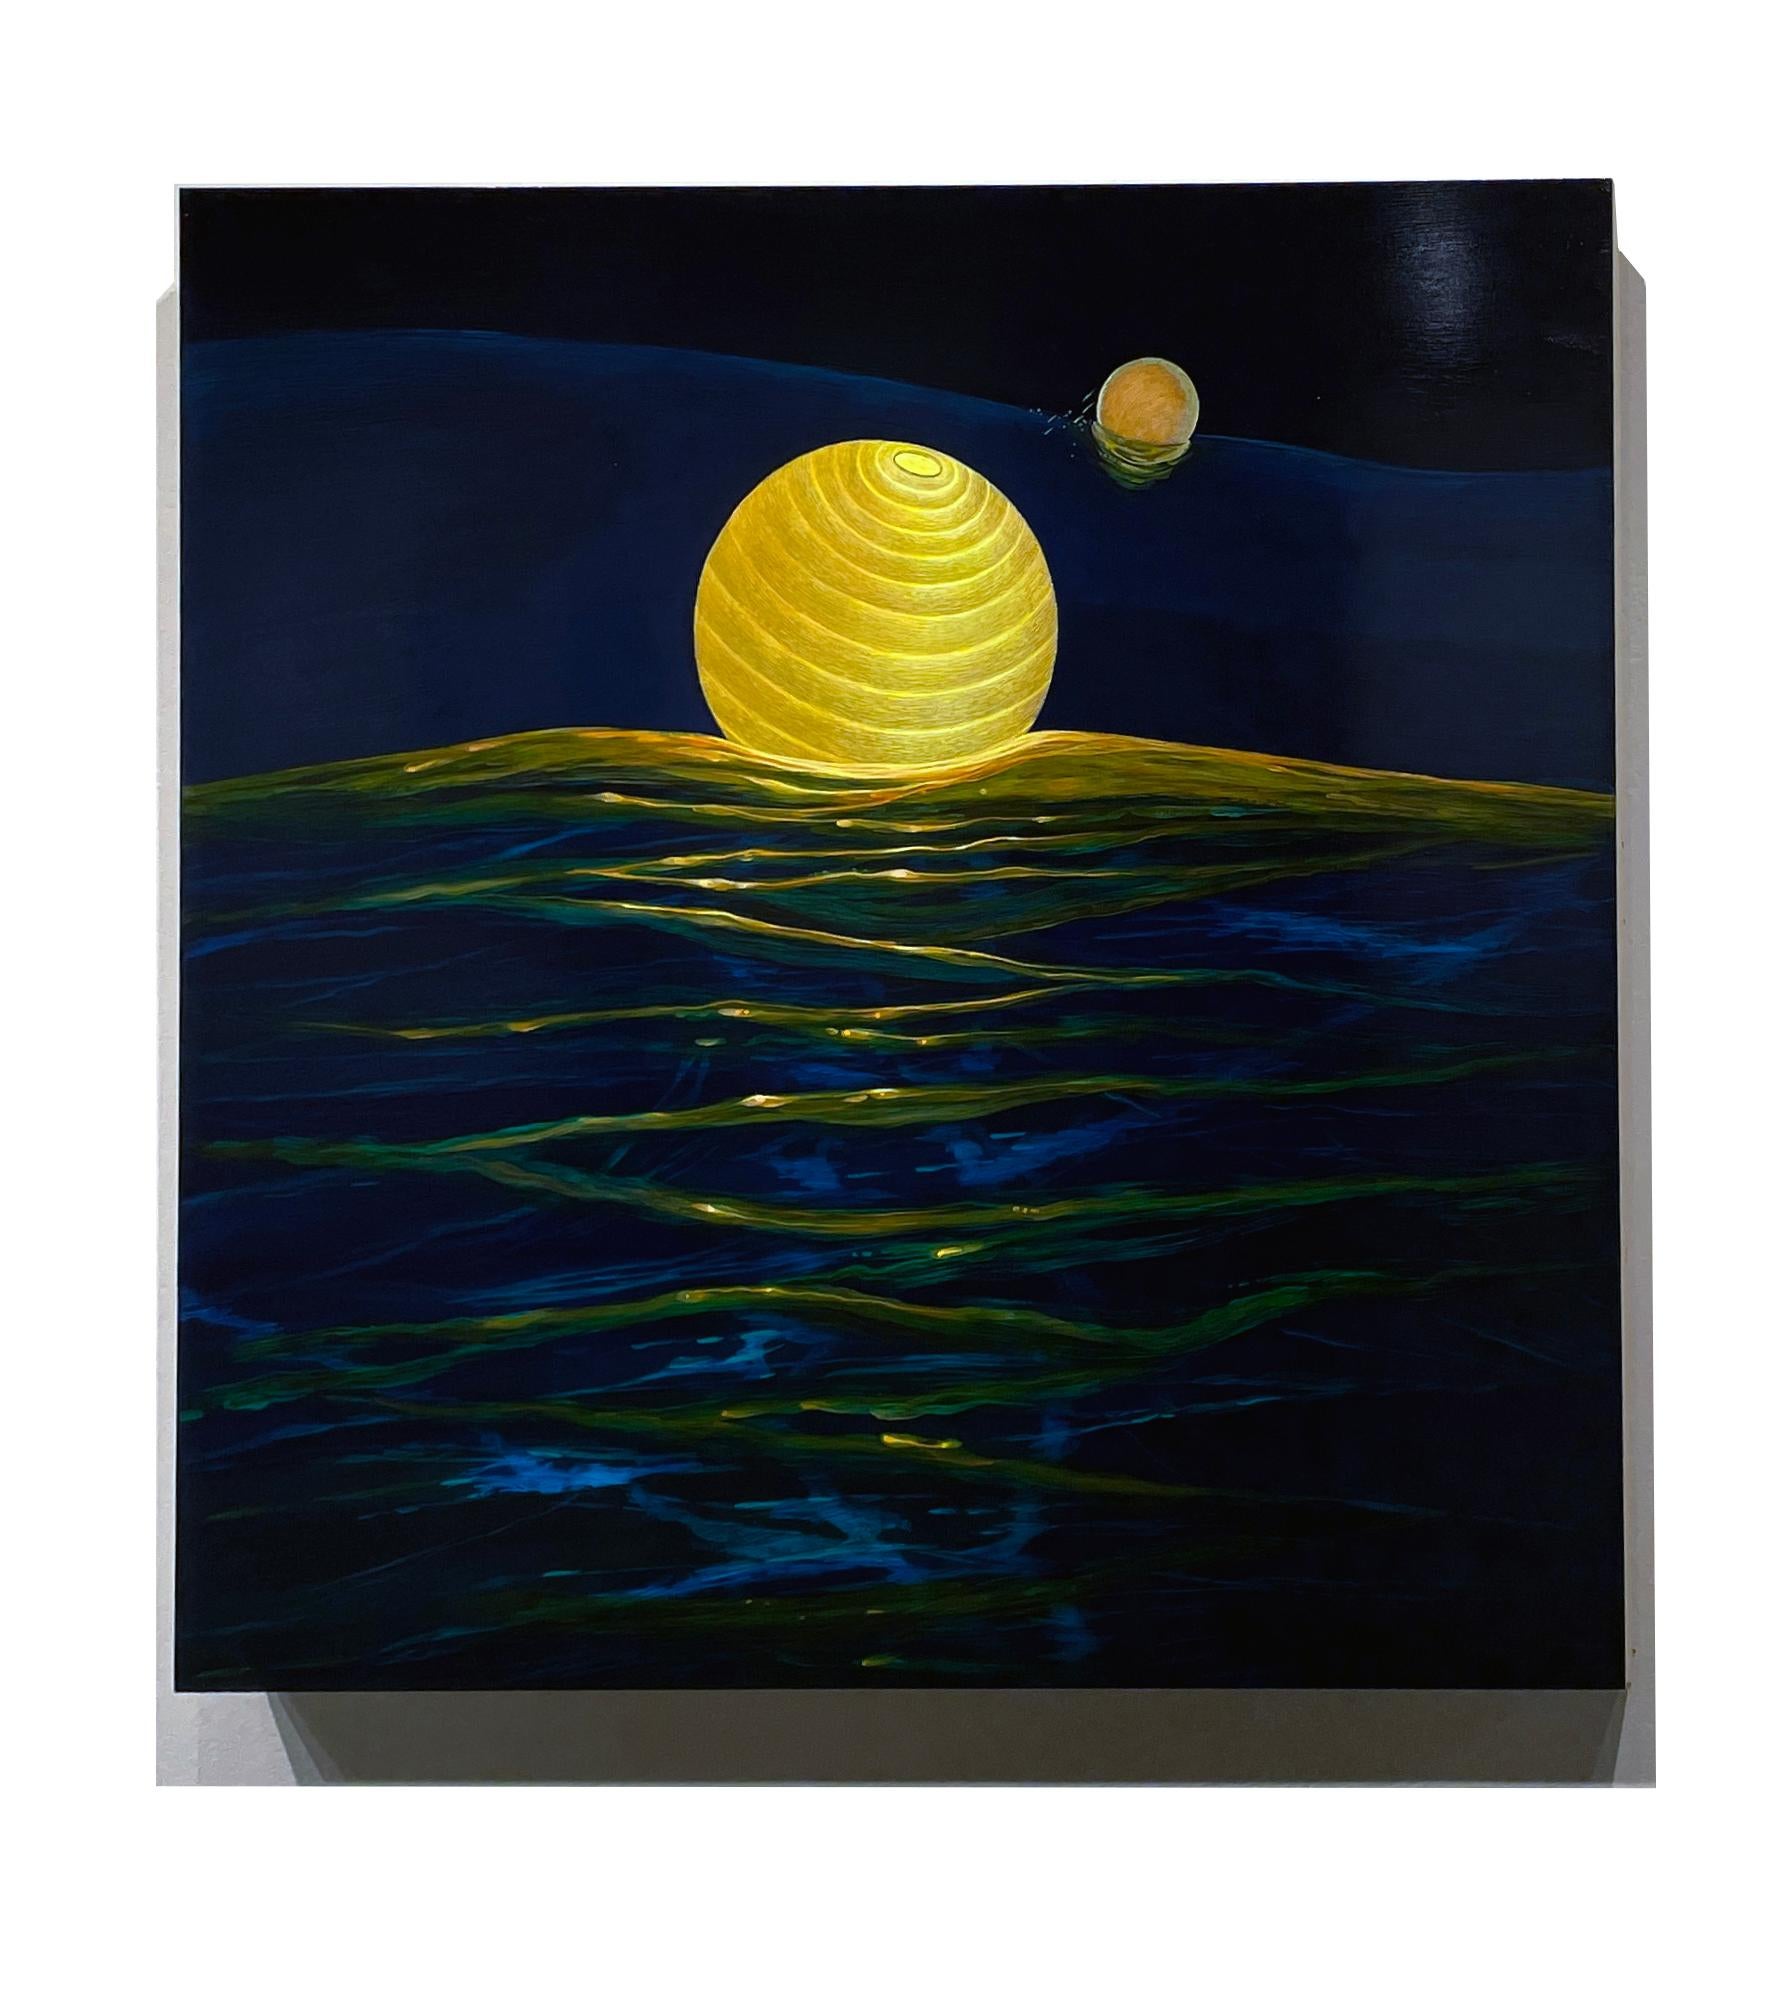 Ocean Echo - Illuminated Paper Lanterns Adrift On Ocean Waves, Acrylic On Panel - Black Landscape Painting by Christina Haglid